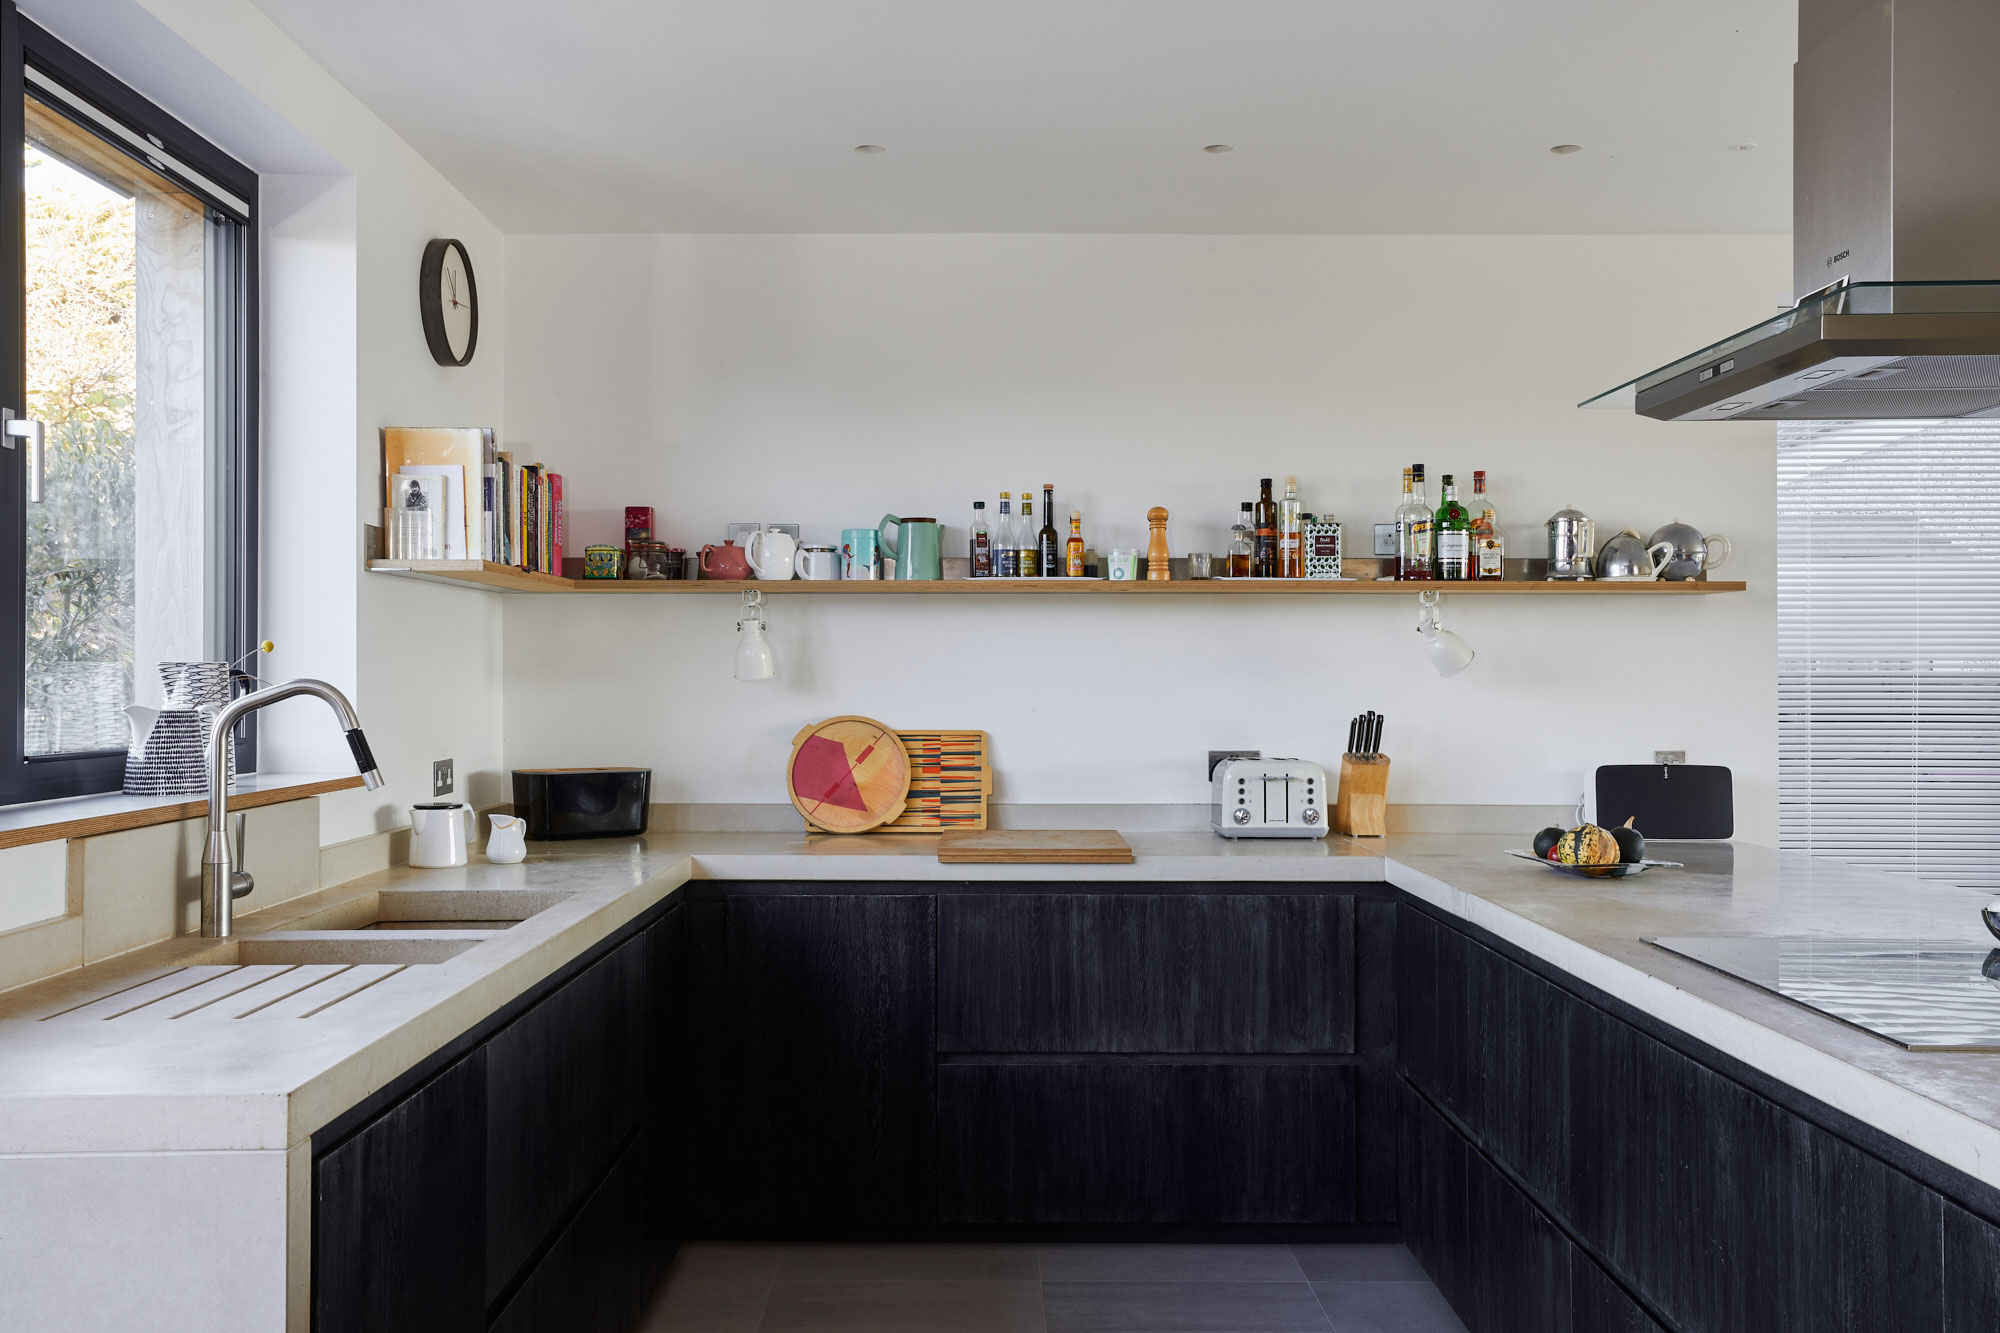 Minimal kitchen design with black washed oak cabinets